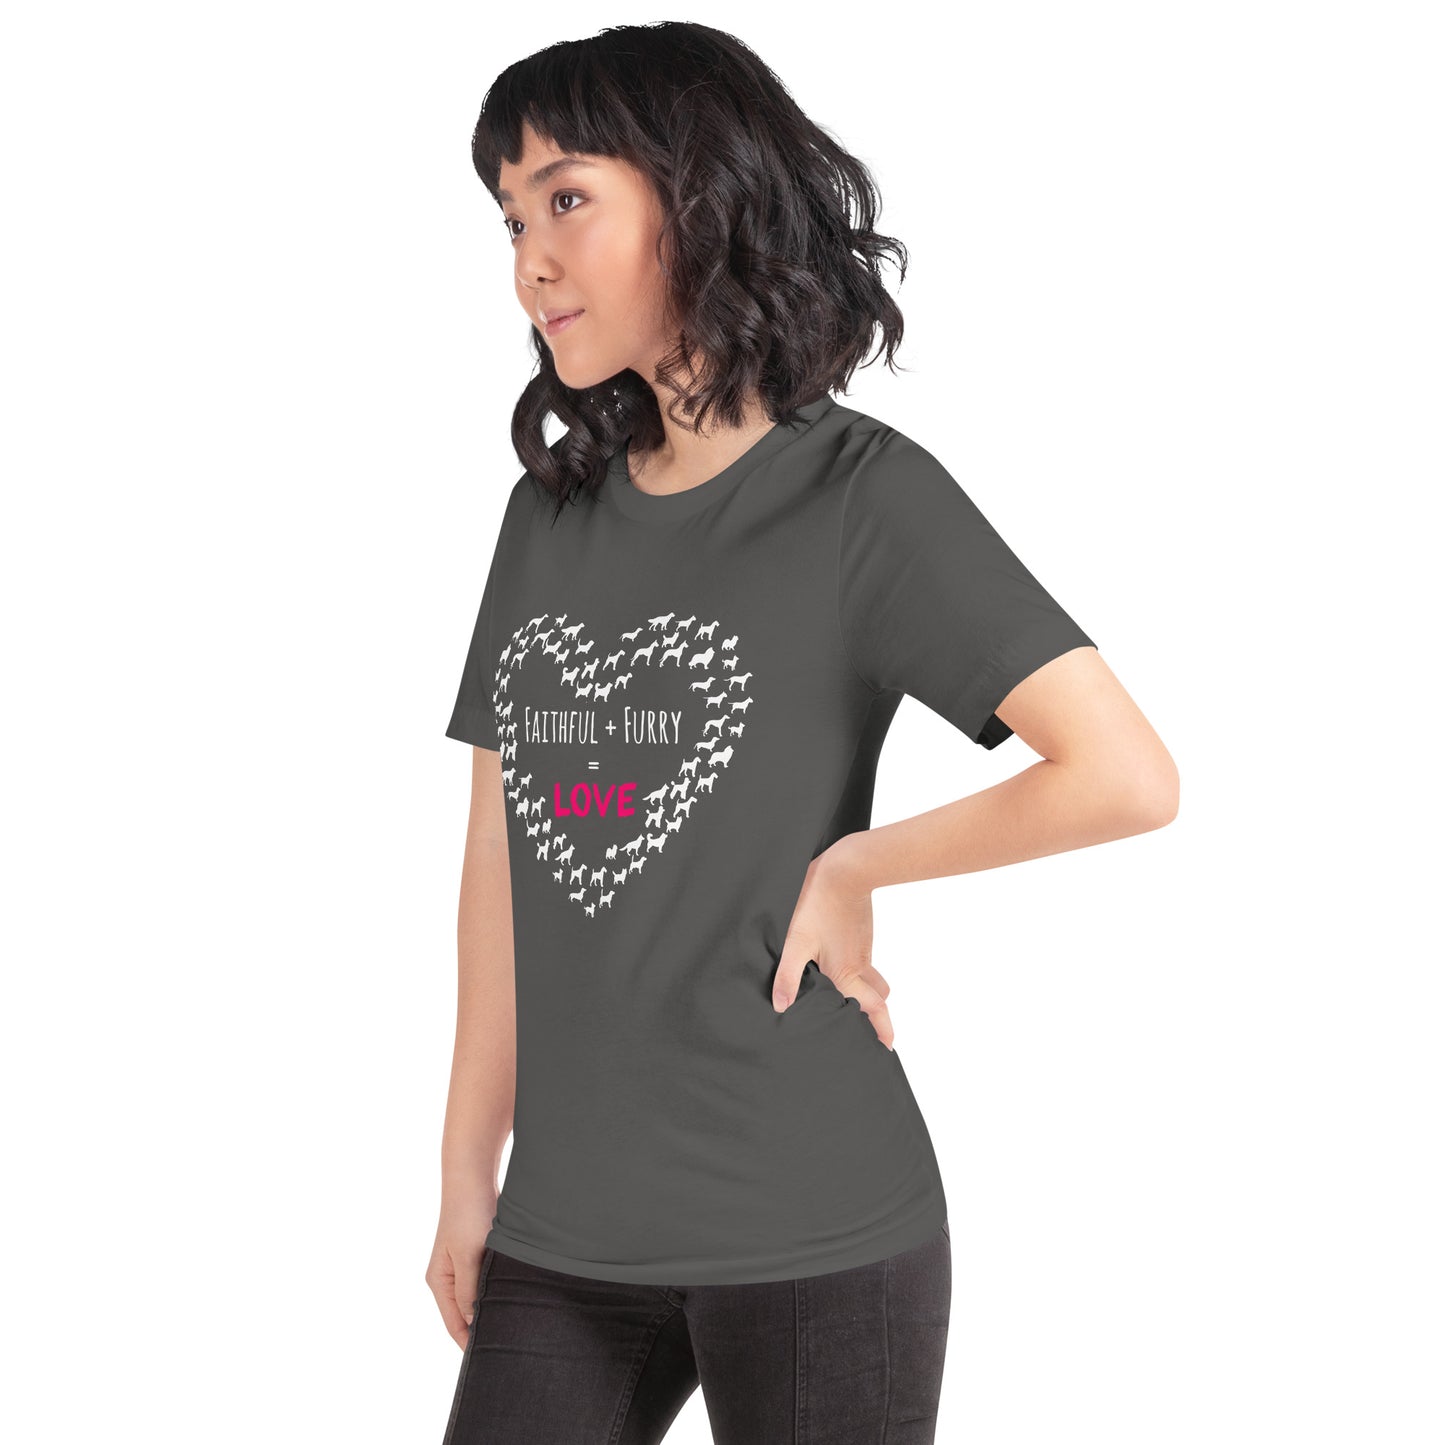 Faithful + Furry  = Love t-shirt